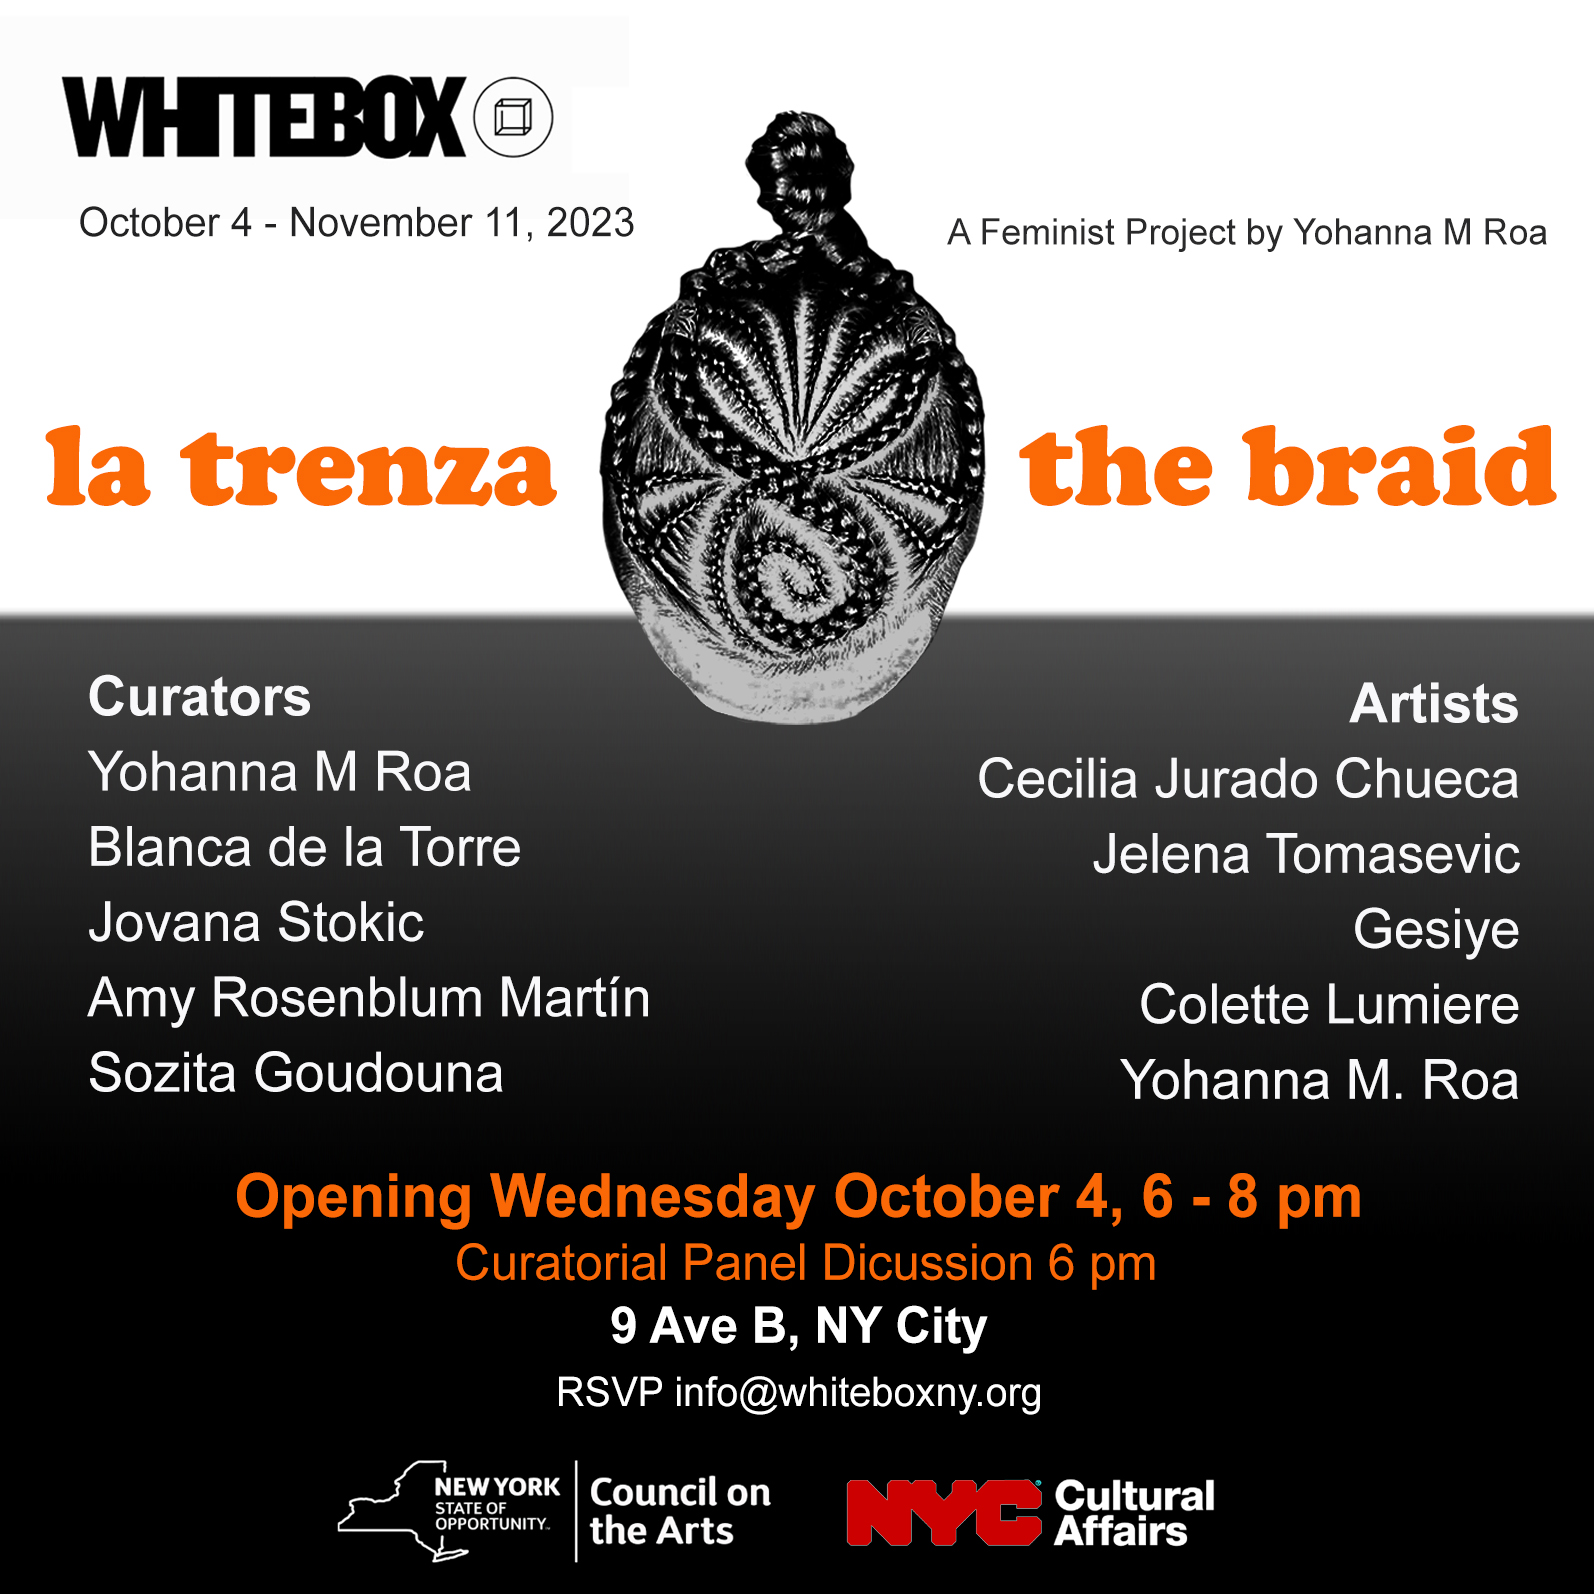 la trenza - the braid - WhiteBox